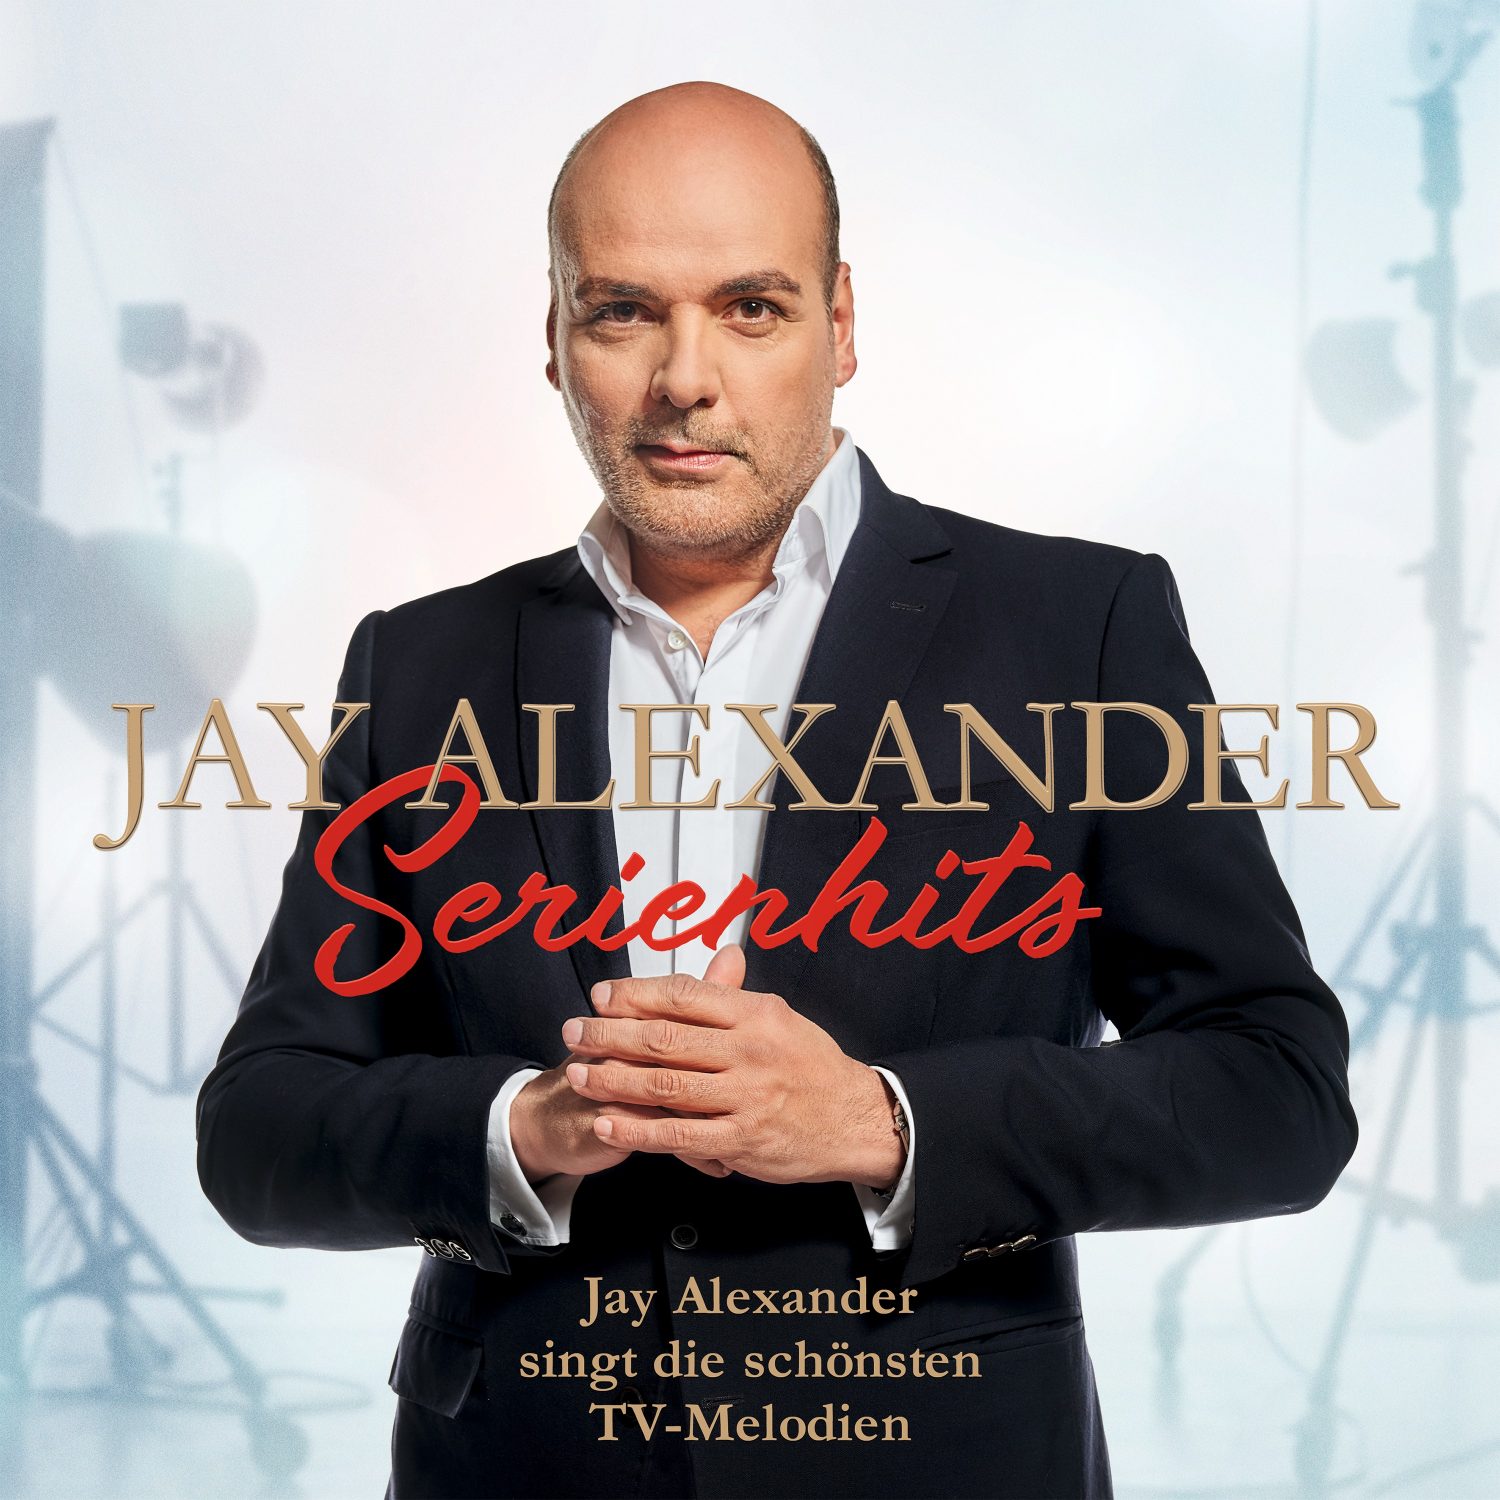 Jay Alexander - “Serienhits“ (Panorama/Universal Music)